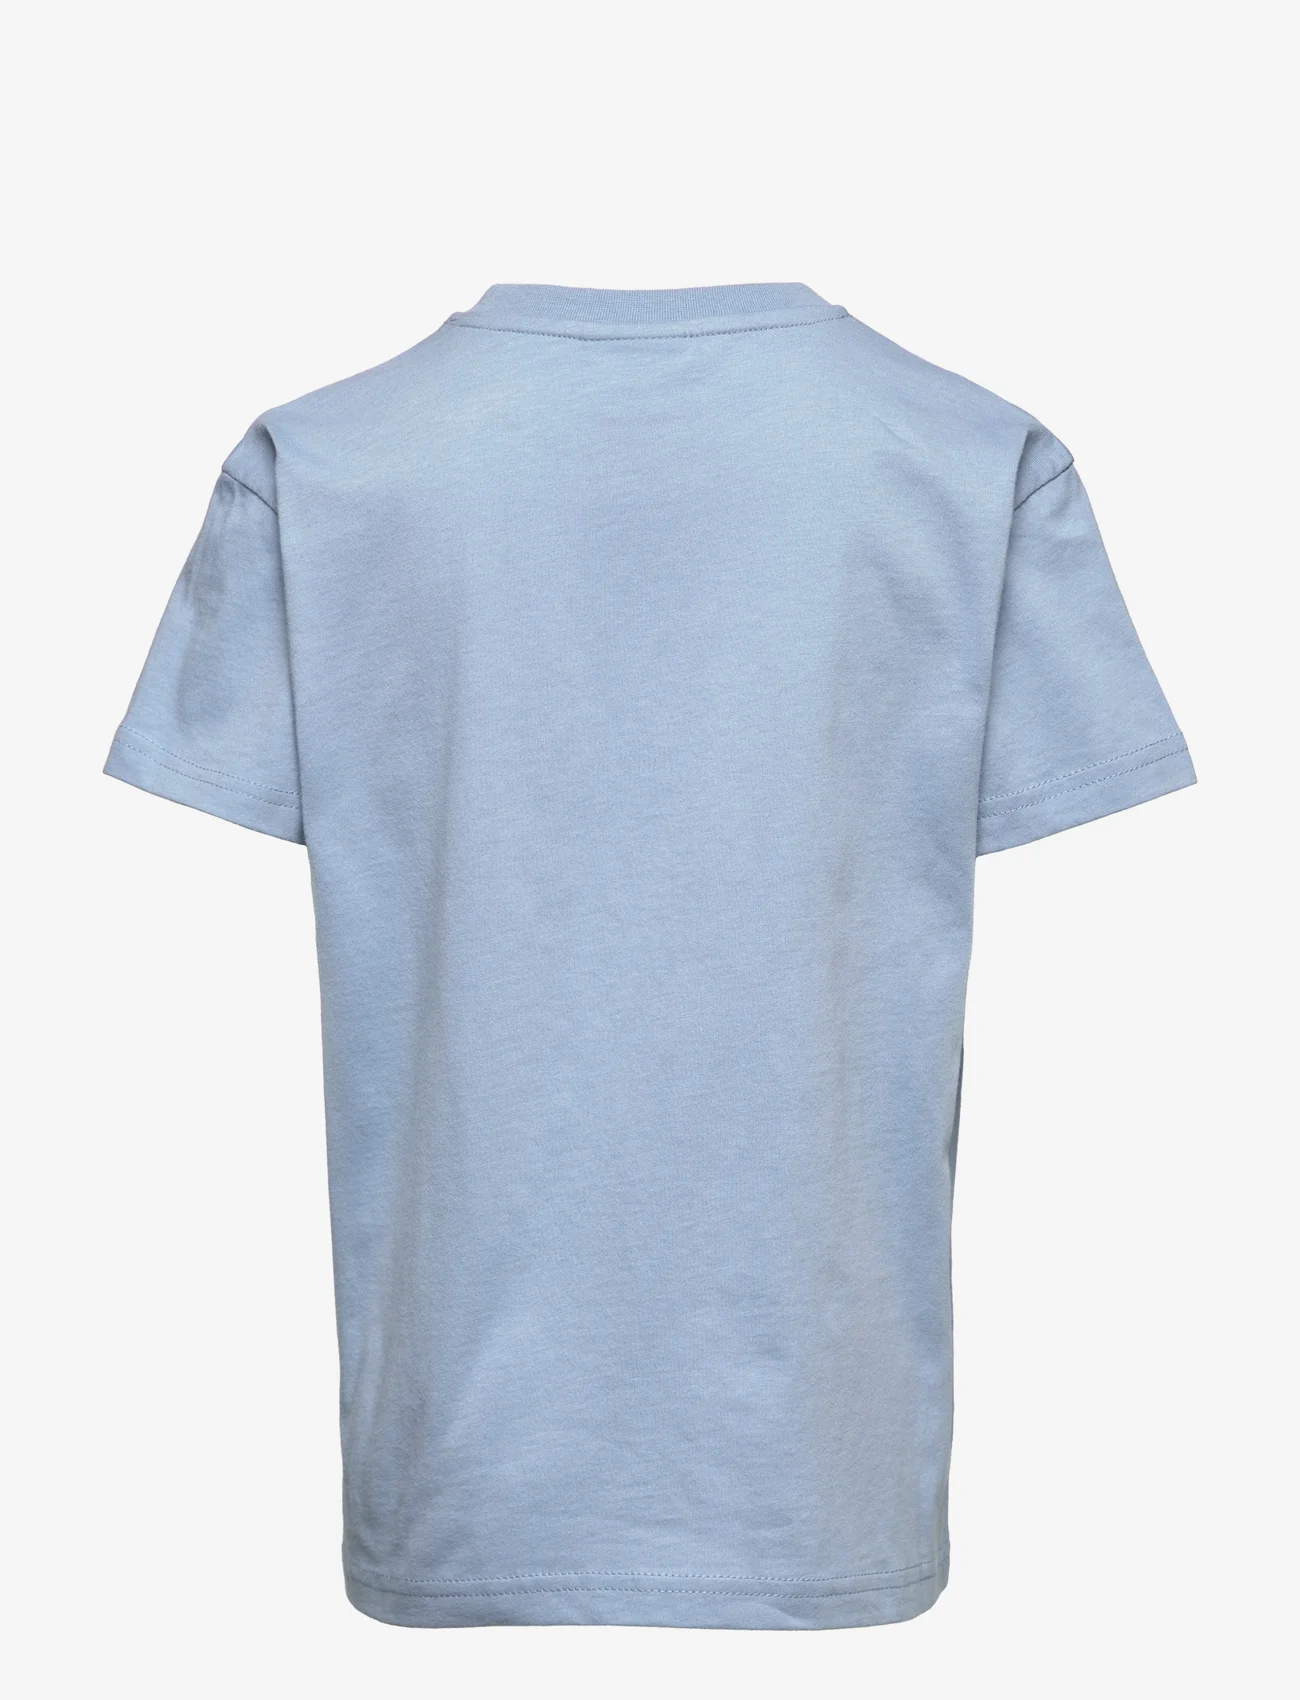 Sofie Schnoor Baby and Kids - T-shirt - kortærmede t-shirts - light blue - 1